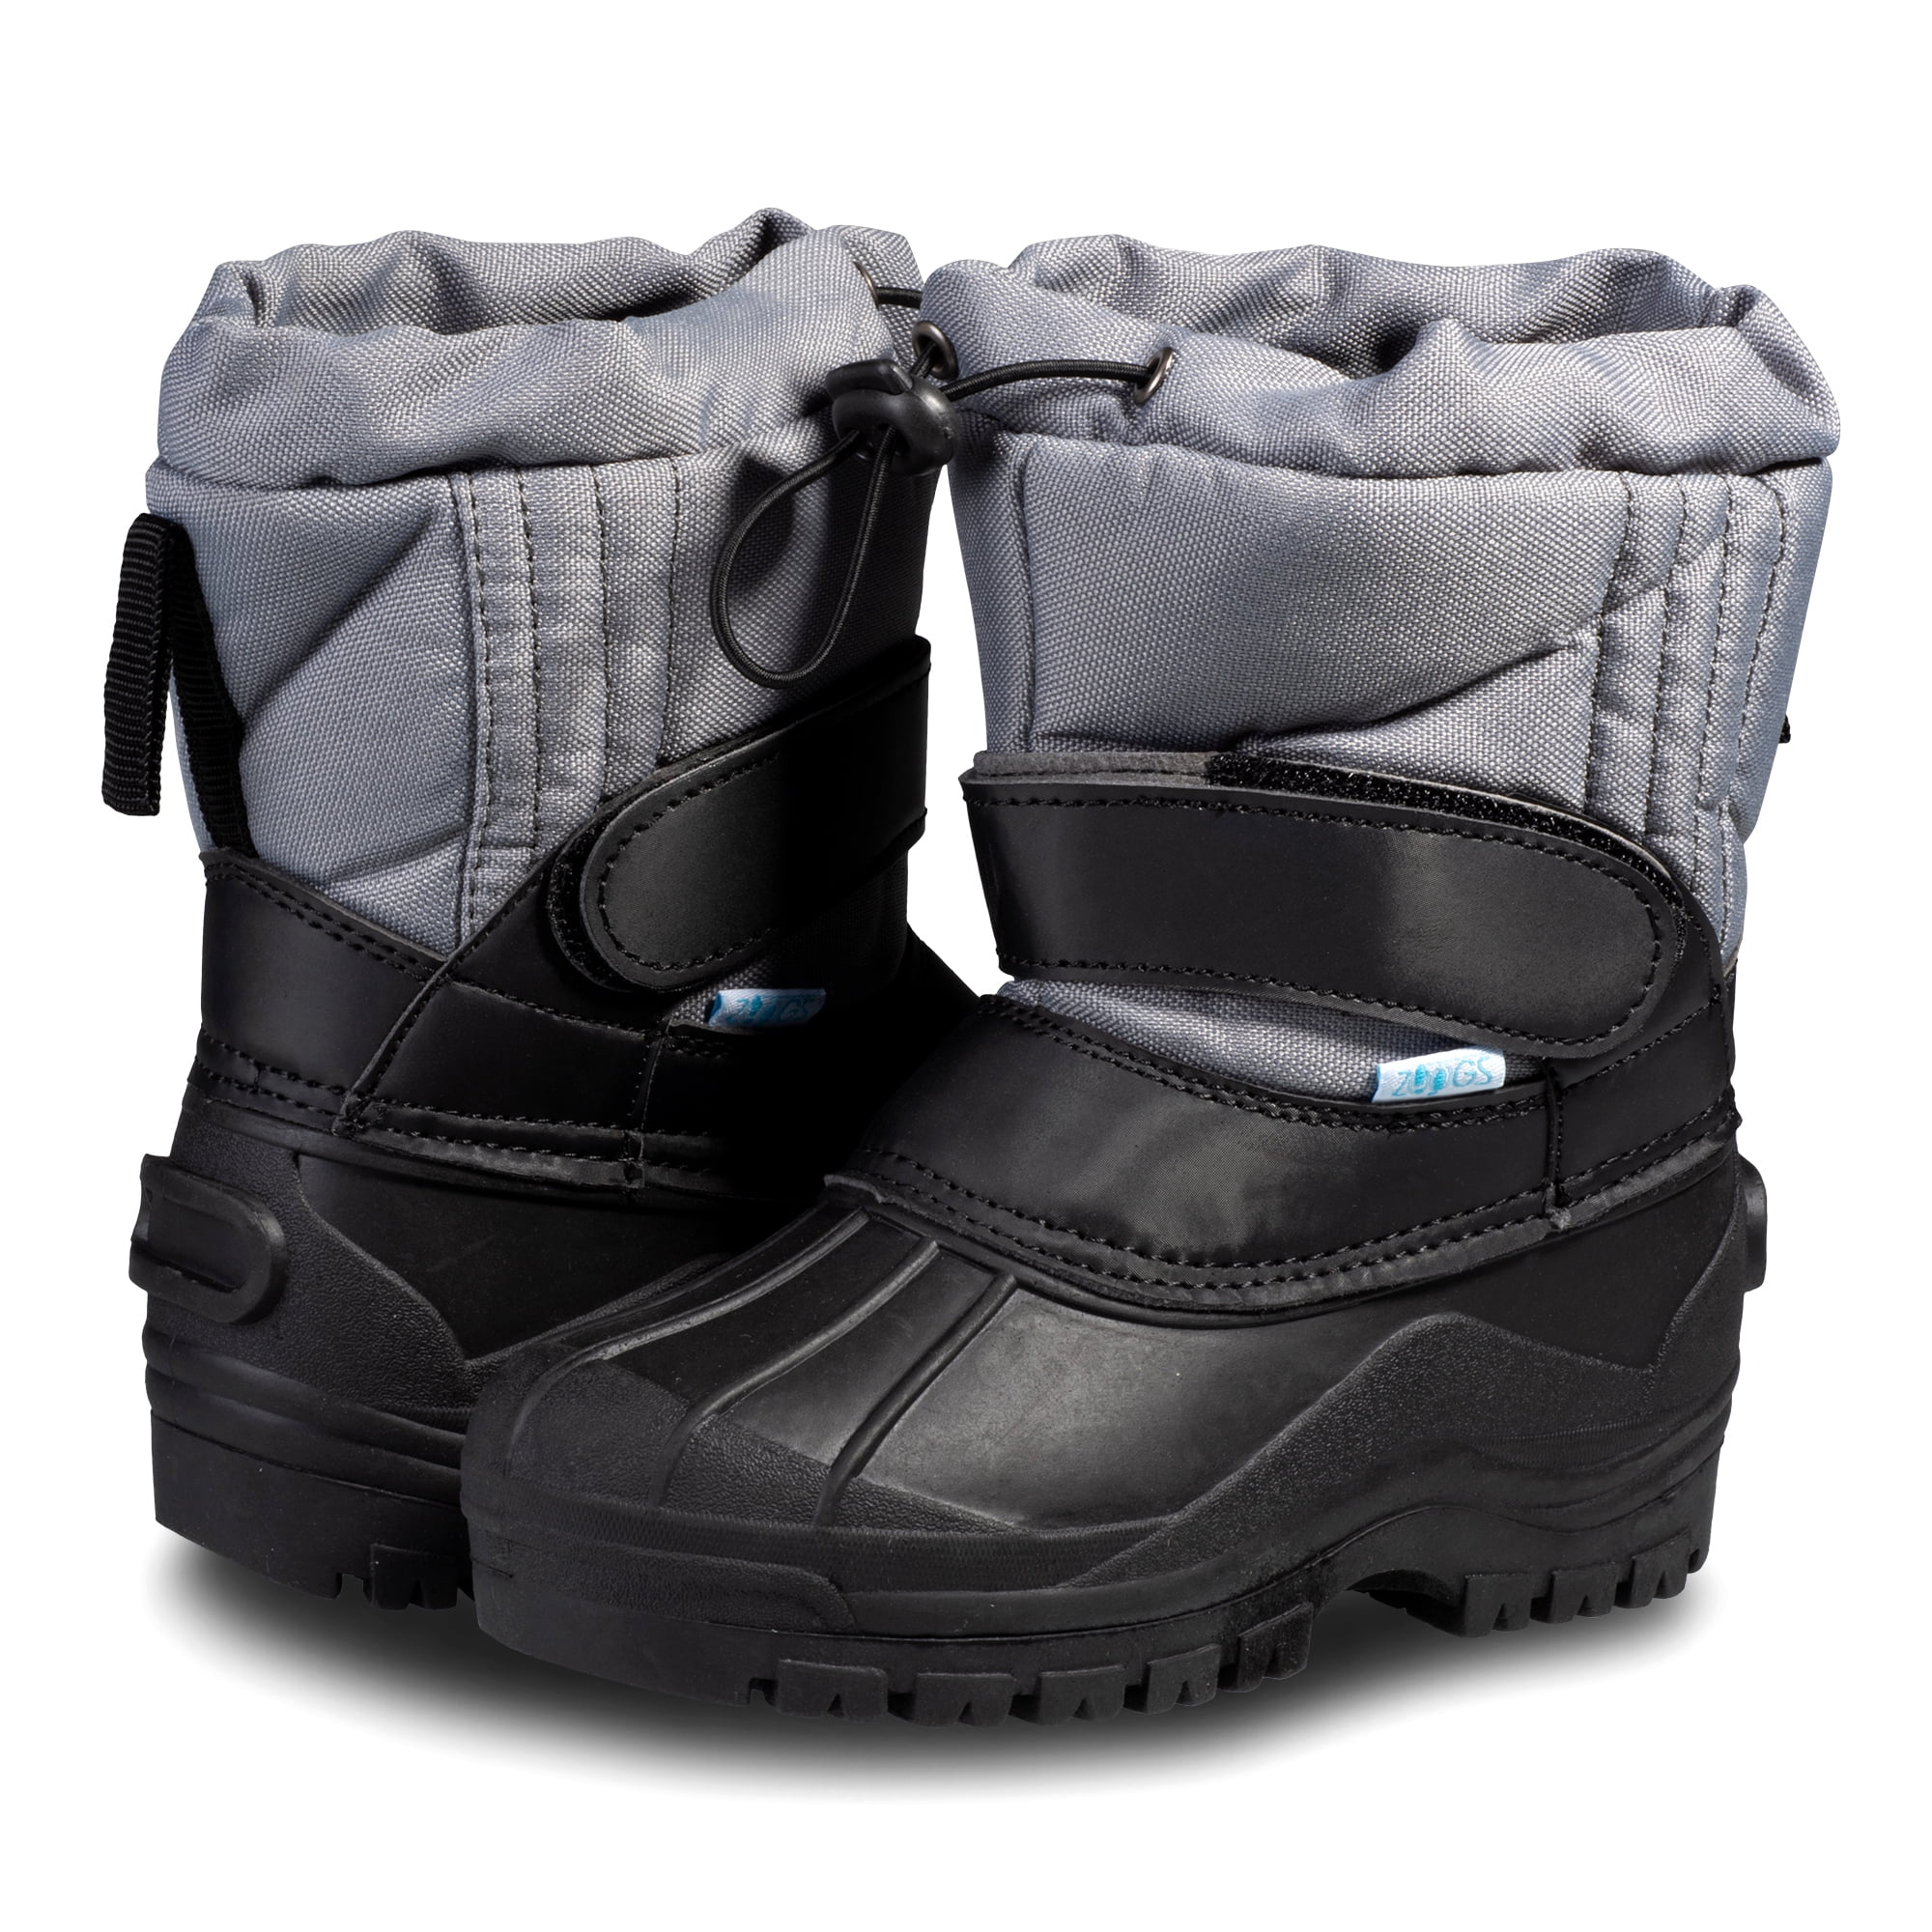 Toddler/Little Kid/Big Kid zgshnfgk Boys & Girls Insulated Waterproof Snow Boots 